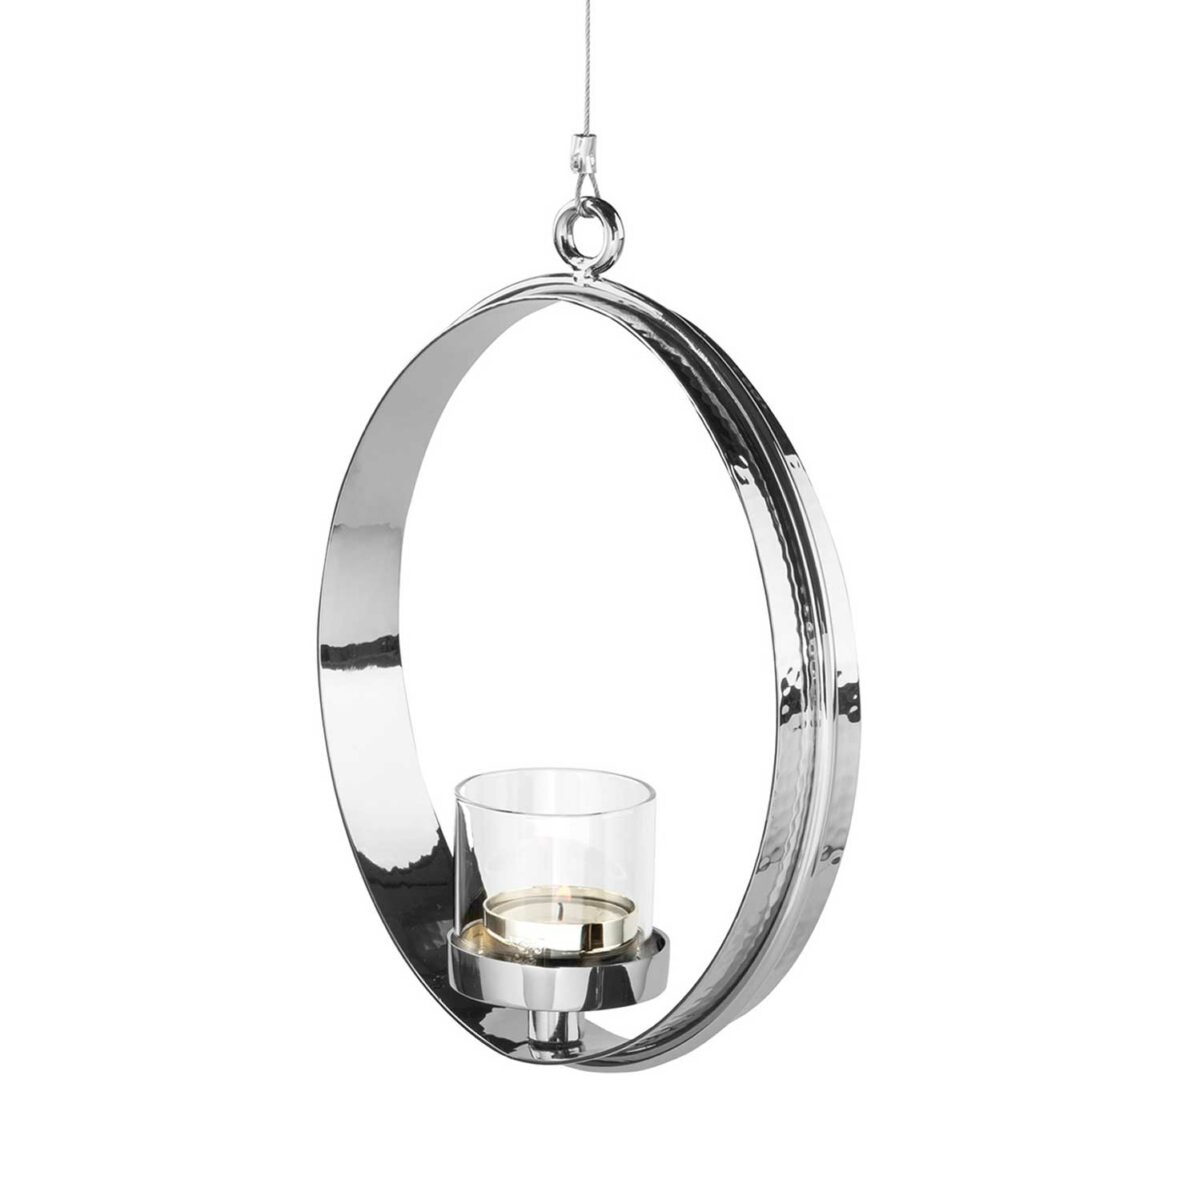 COLETTE maxi tealight holder for hanging